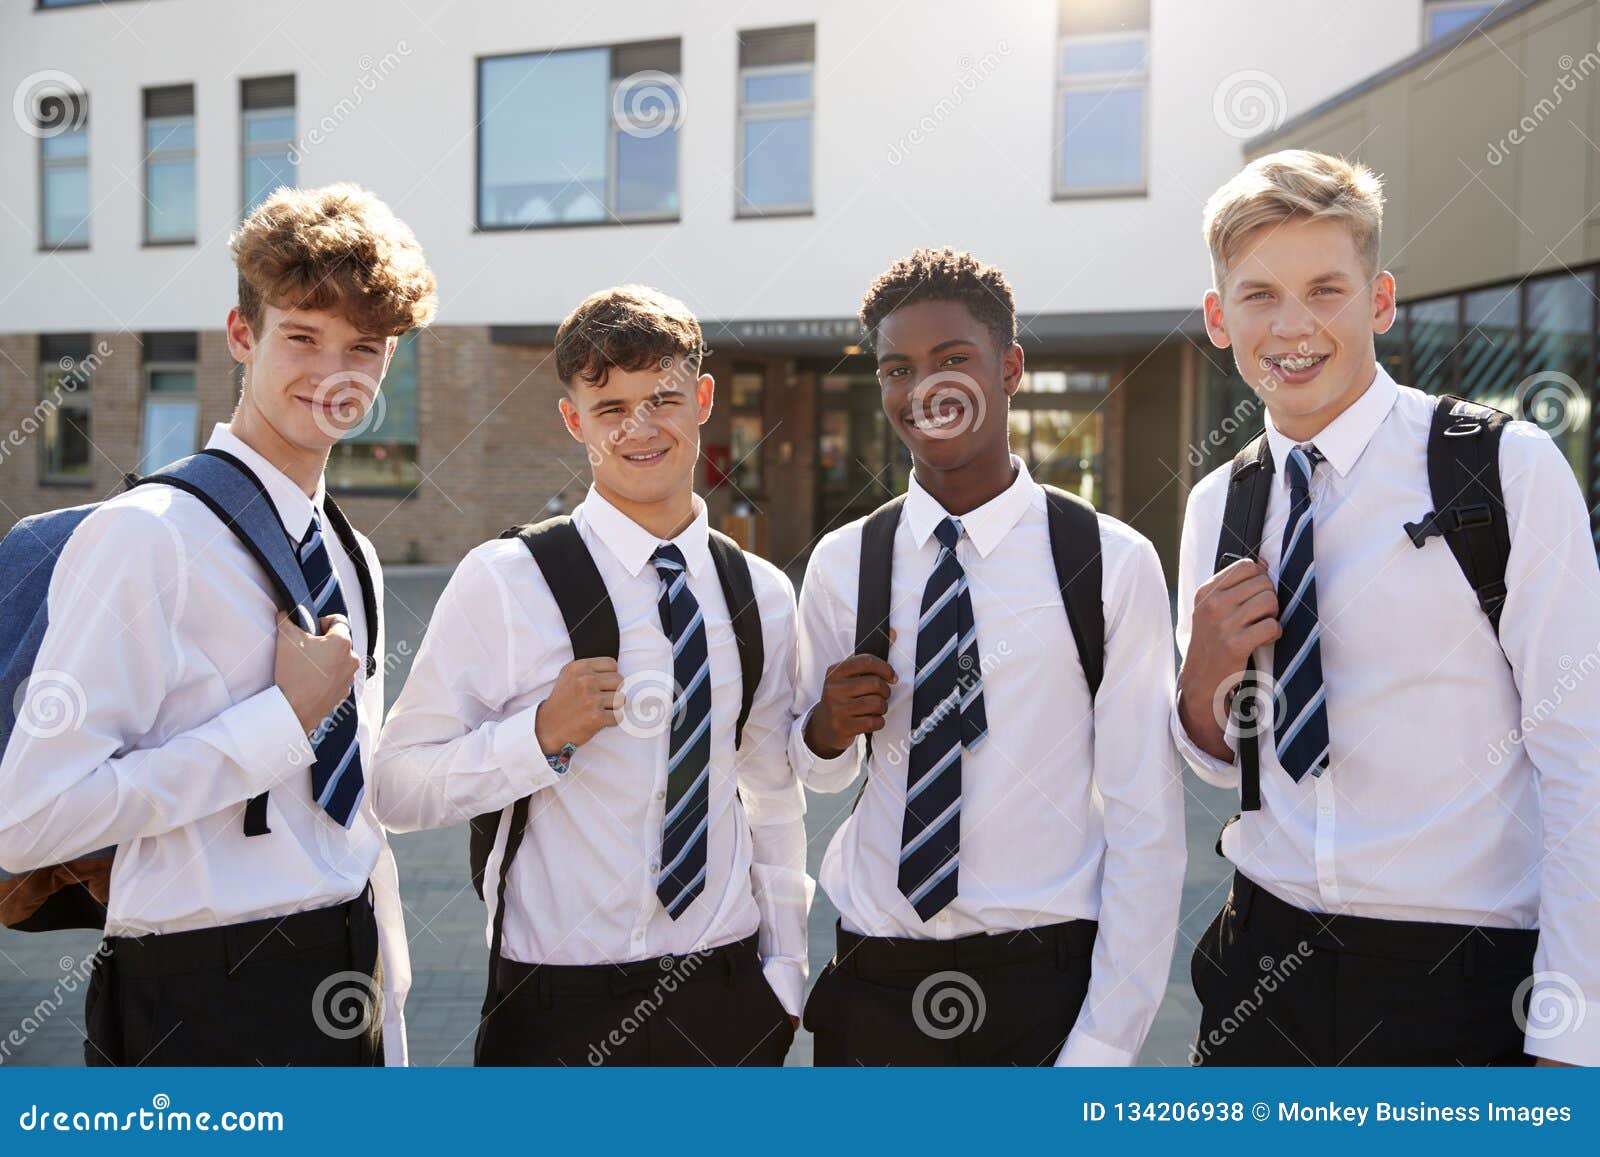 Portrait of Smiling Male High School Students Wearing Uniform Outside ...